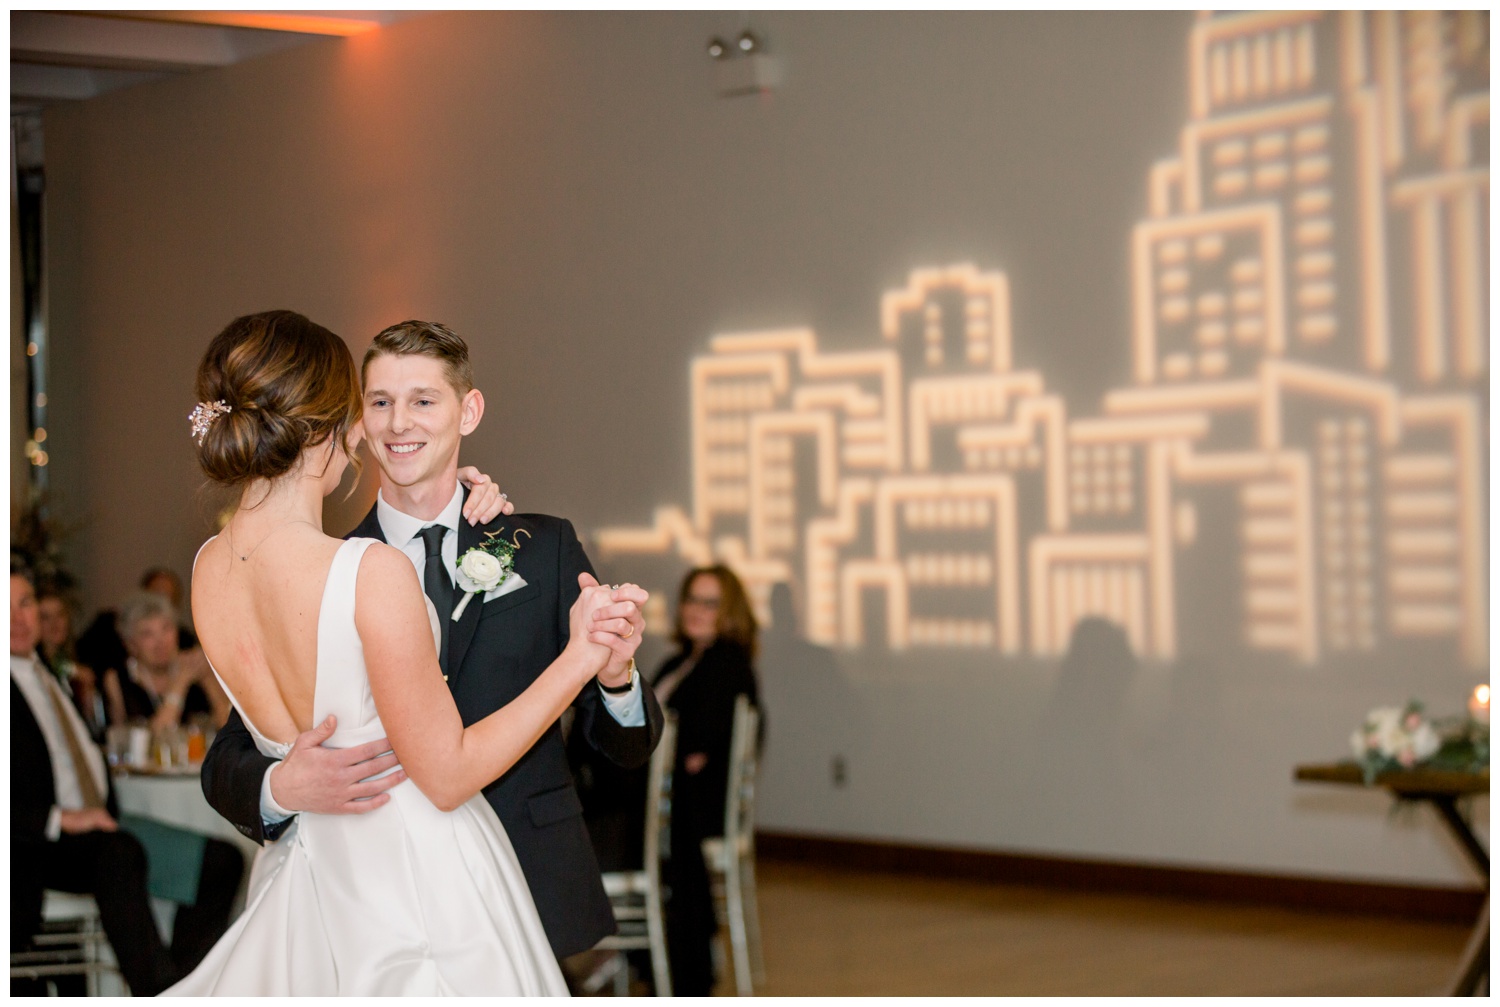 First Dance at The Center Cincinnati Wedding Reception - Cincinnati Skyline Lighting